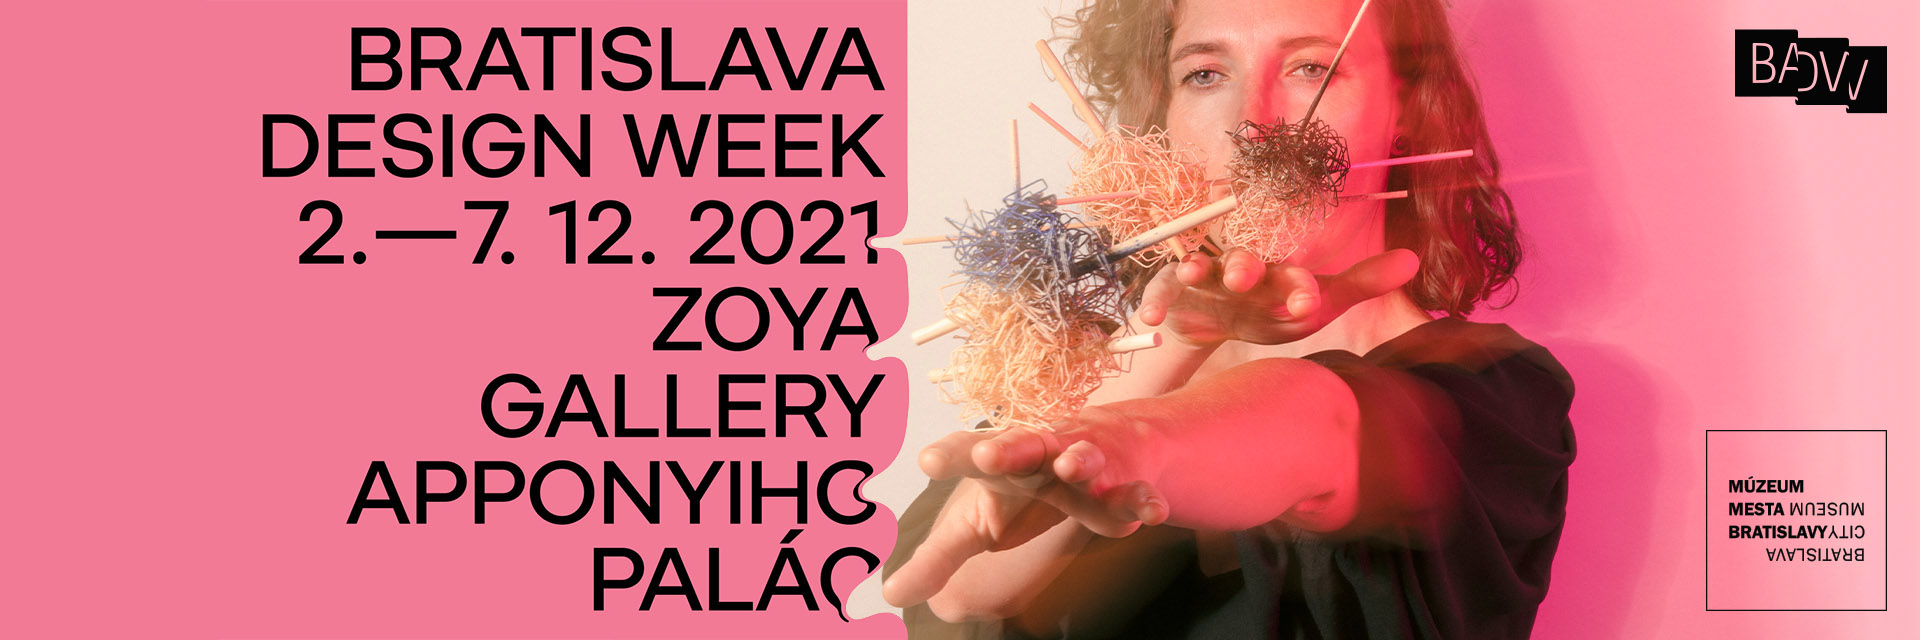 Bratislava Design Week 2021